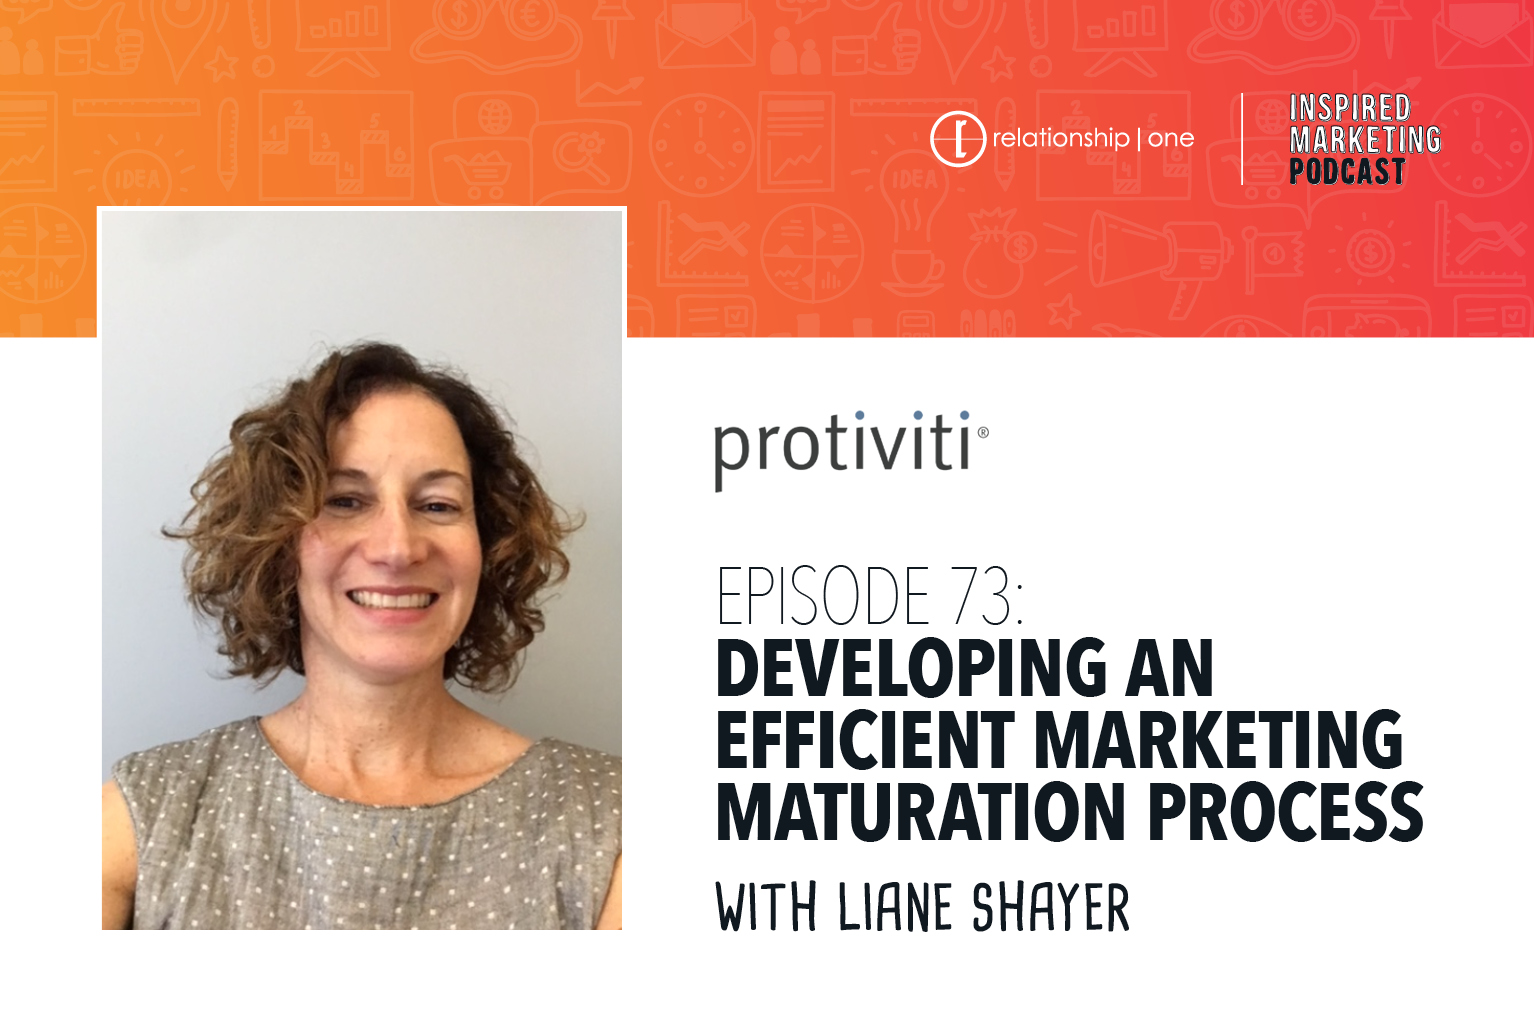 Inspired Marketing: Protiviti’s Liane Shayer on Developing an Efficient Marketing Maturation Process